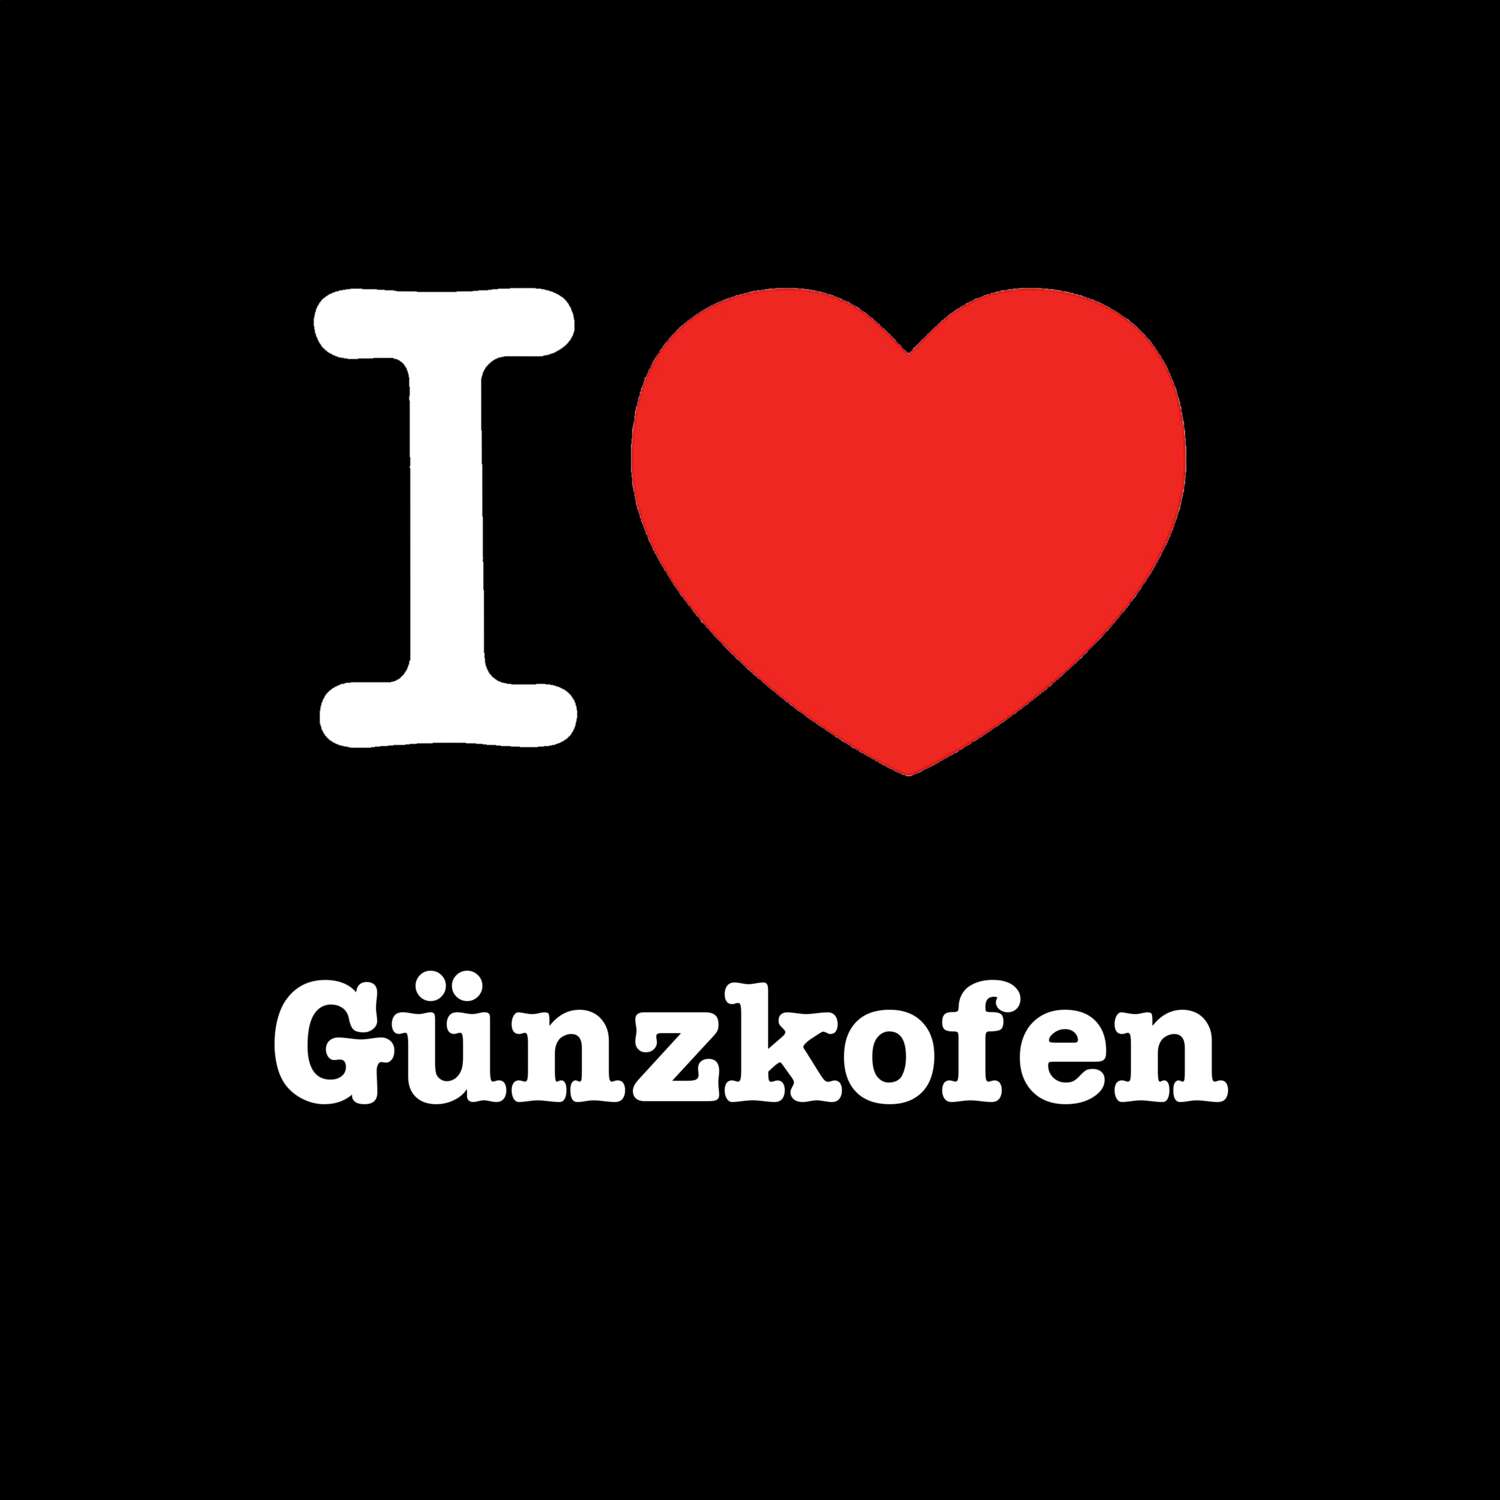 Günzkofen T-Shirt »I love«